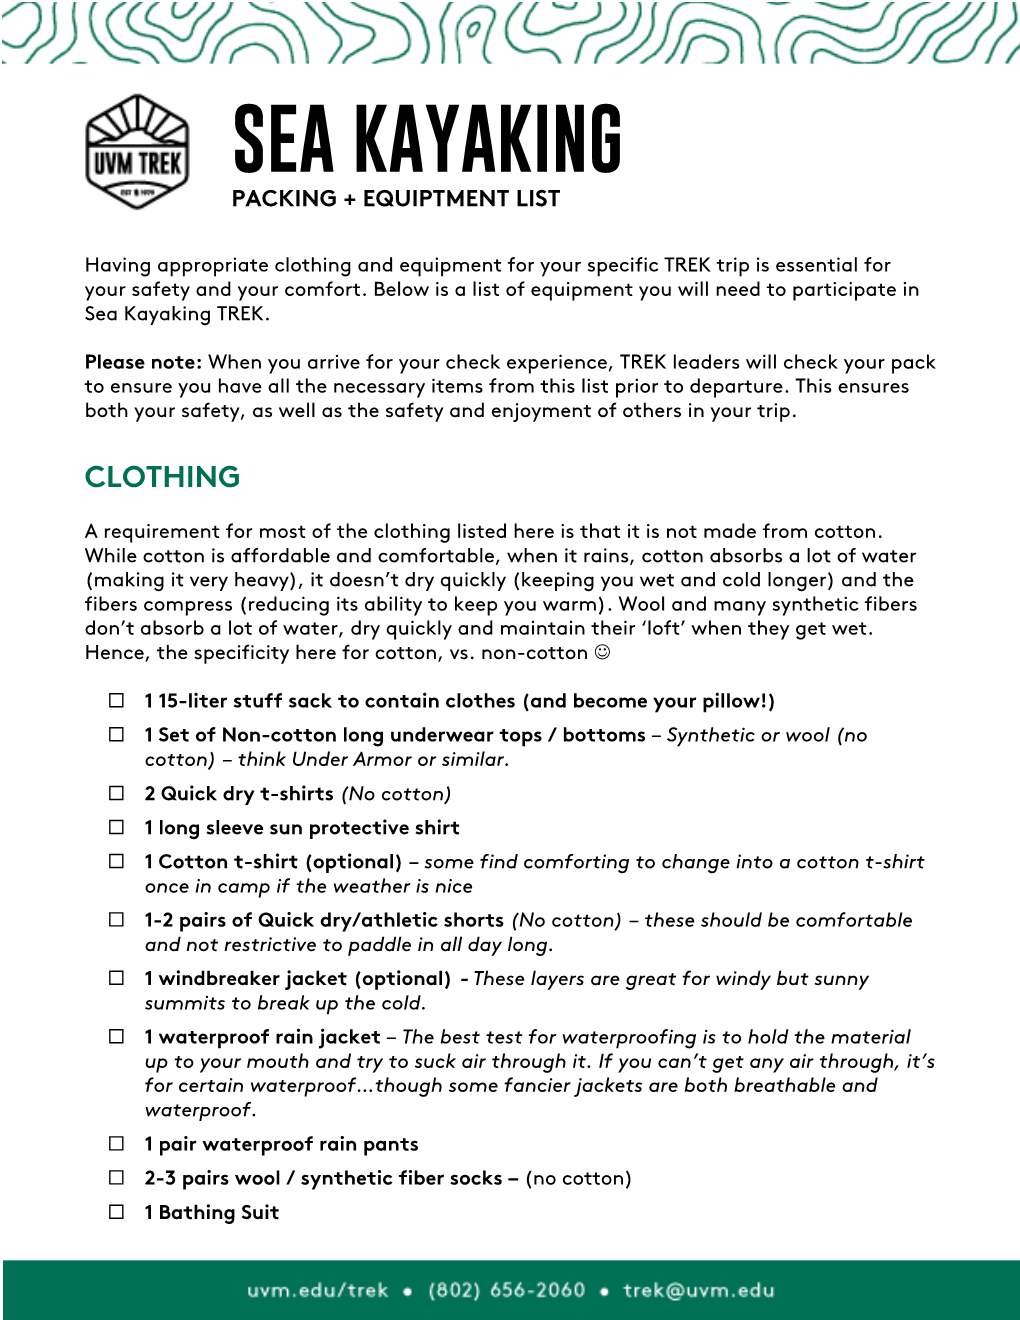 Sea Kayaking Packing + Equiptment List